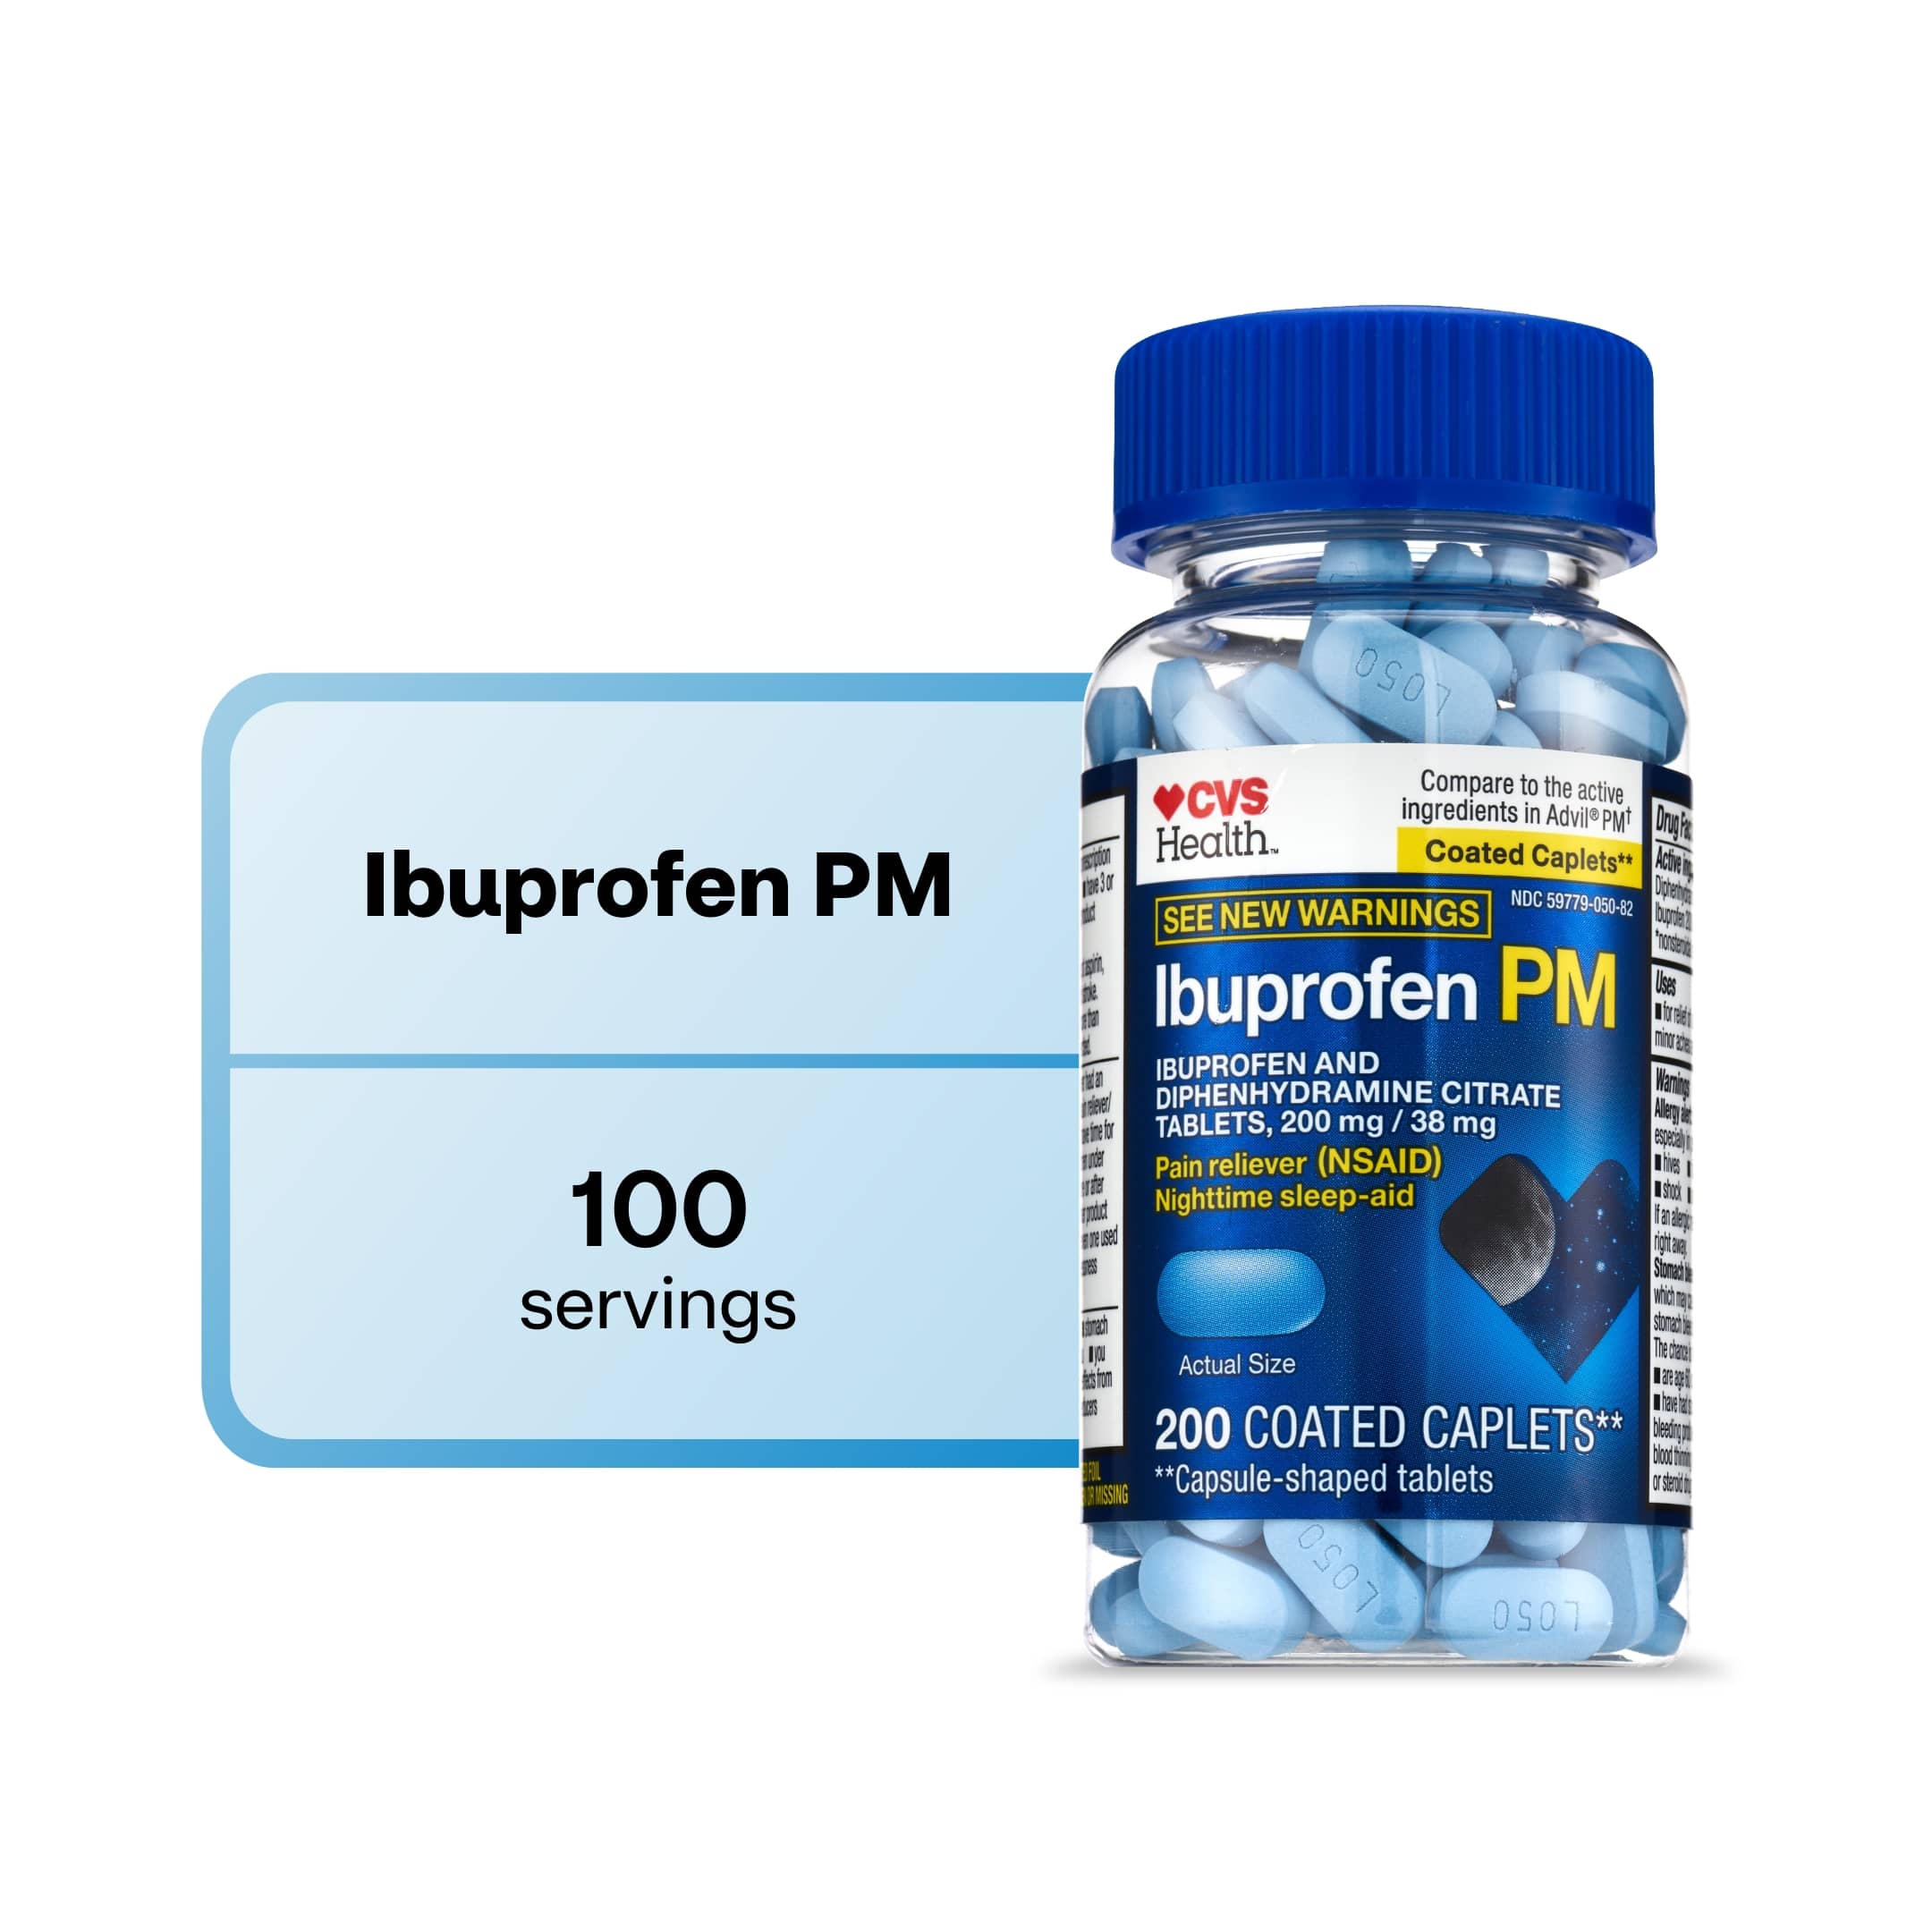 CVS Health Ibuprofen PM Pain Reliever & Nighttime Sleep-Aid Coated Caplets